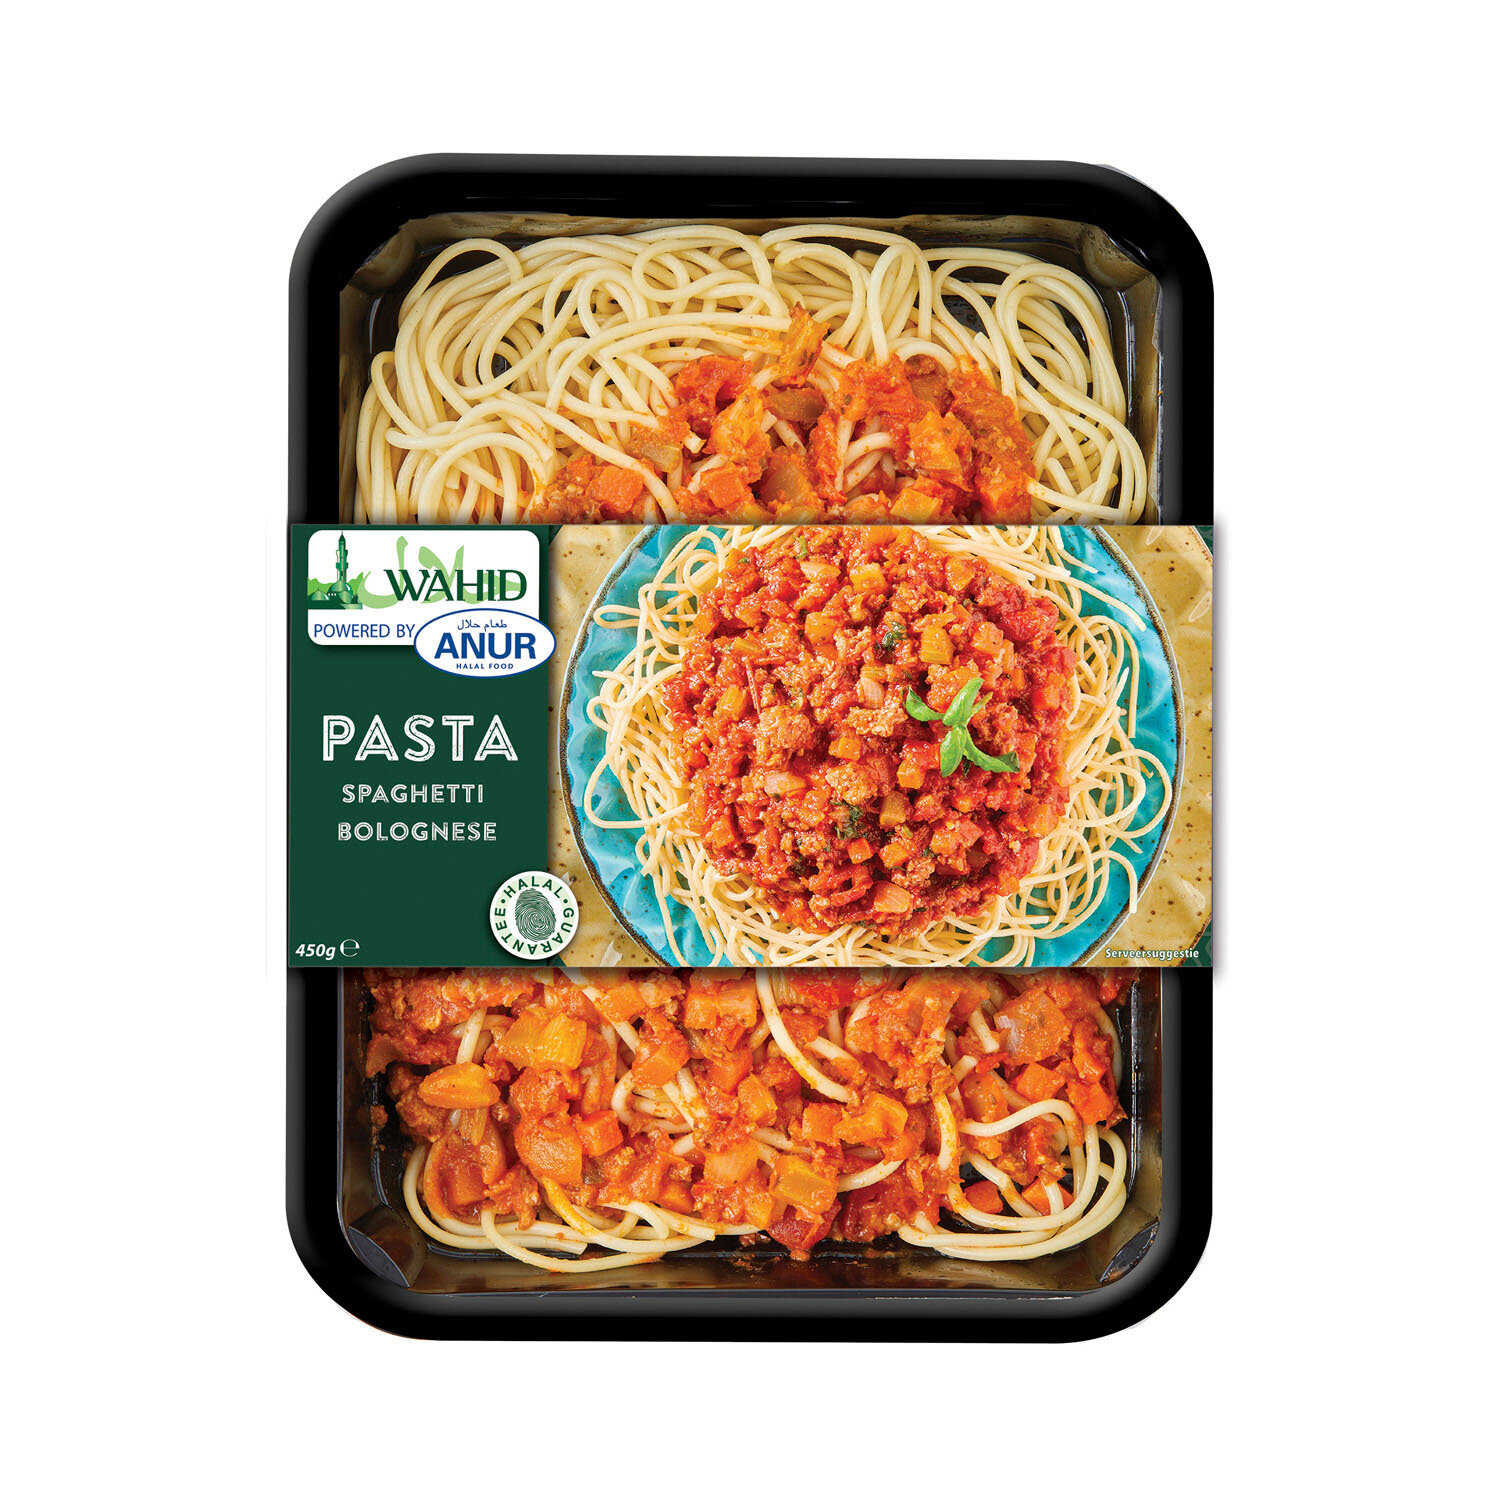 Pasta - Spaghetti bolognese - Wahid (Copy) (Copy)